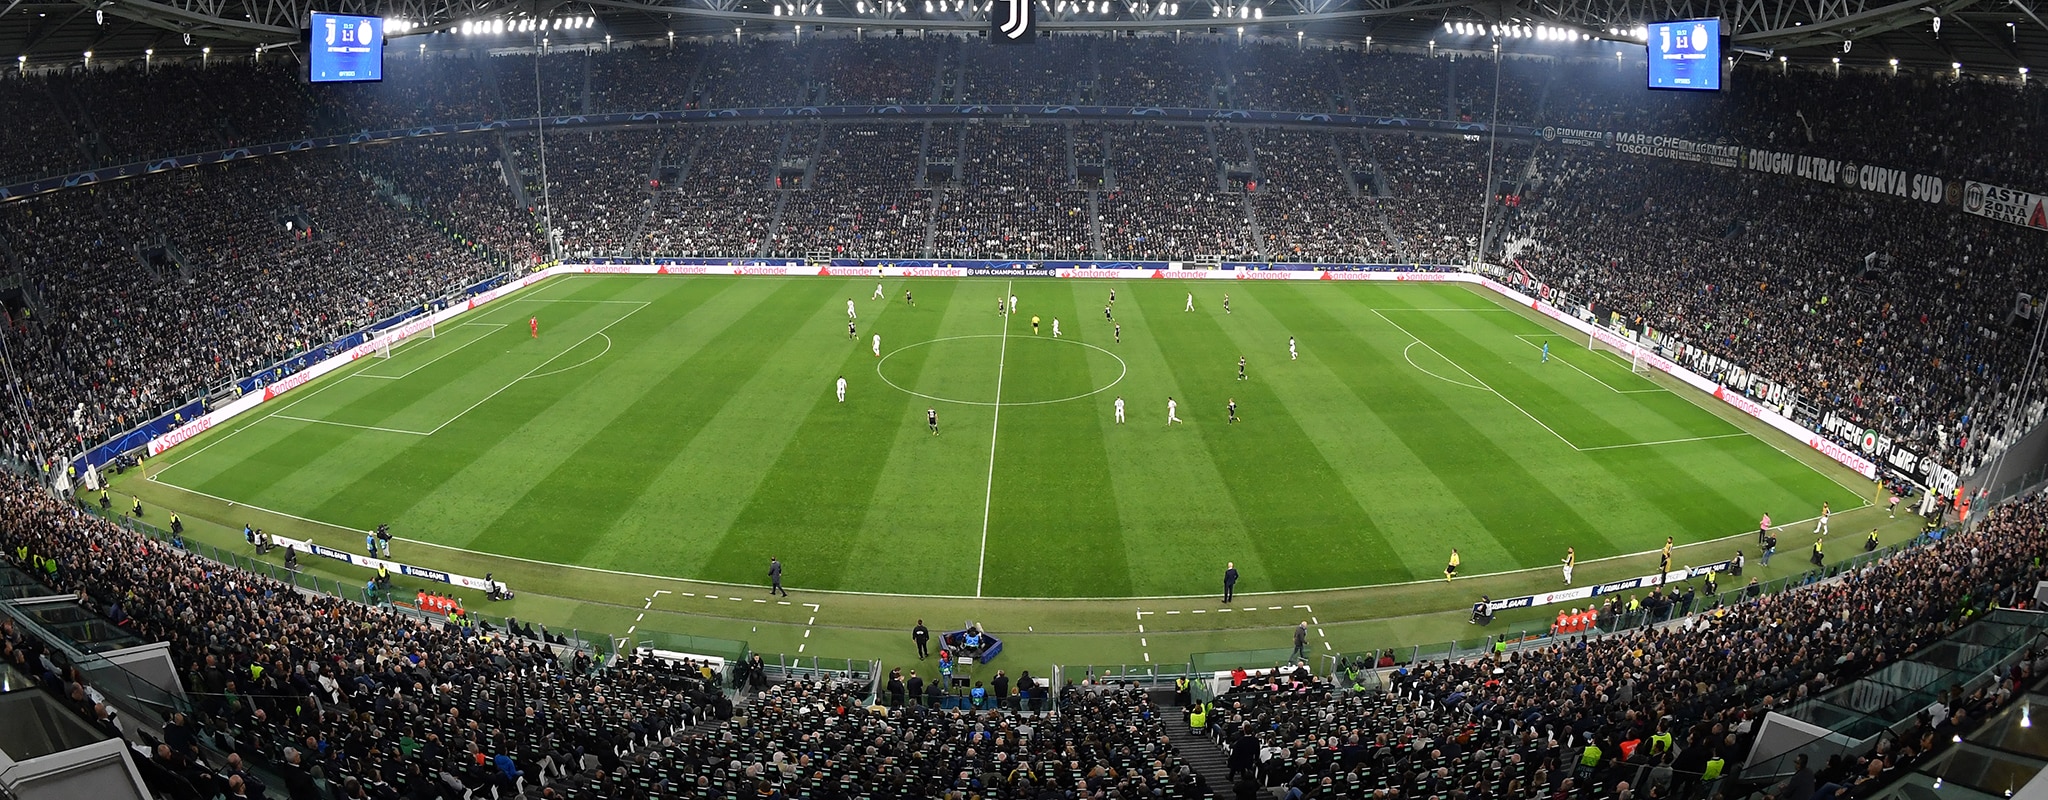 Juventus vs chelsea